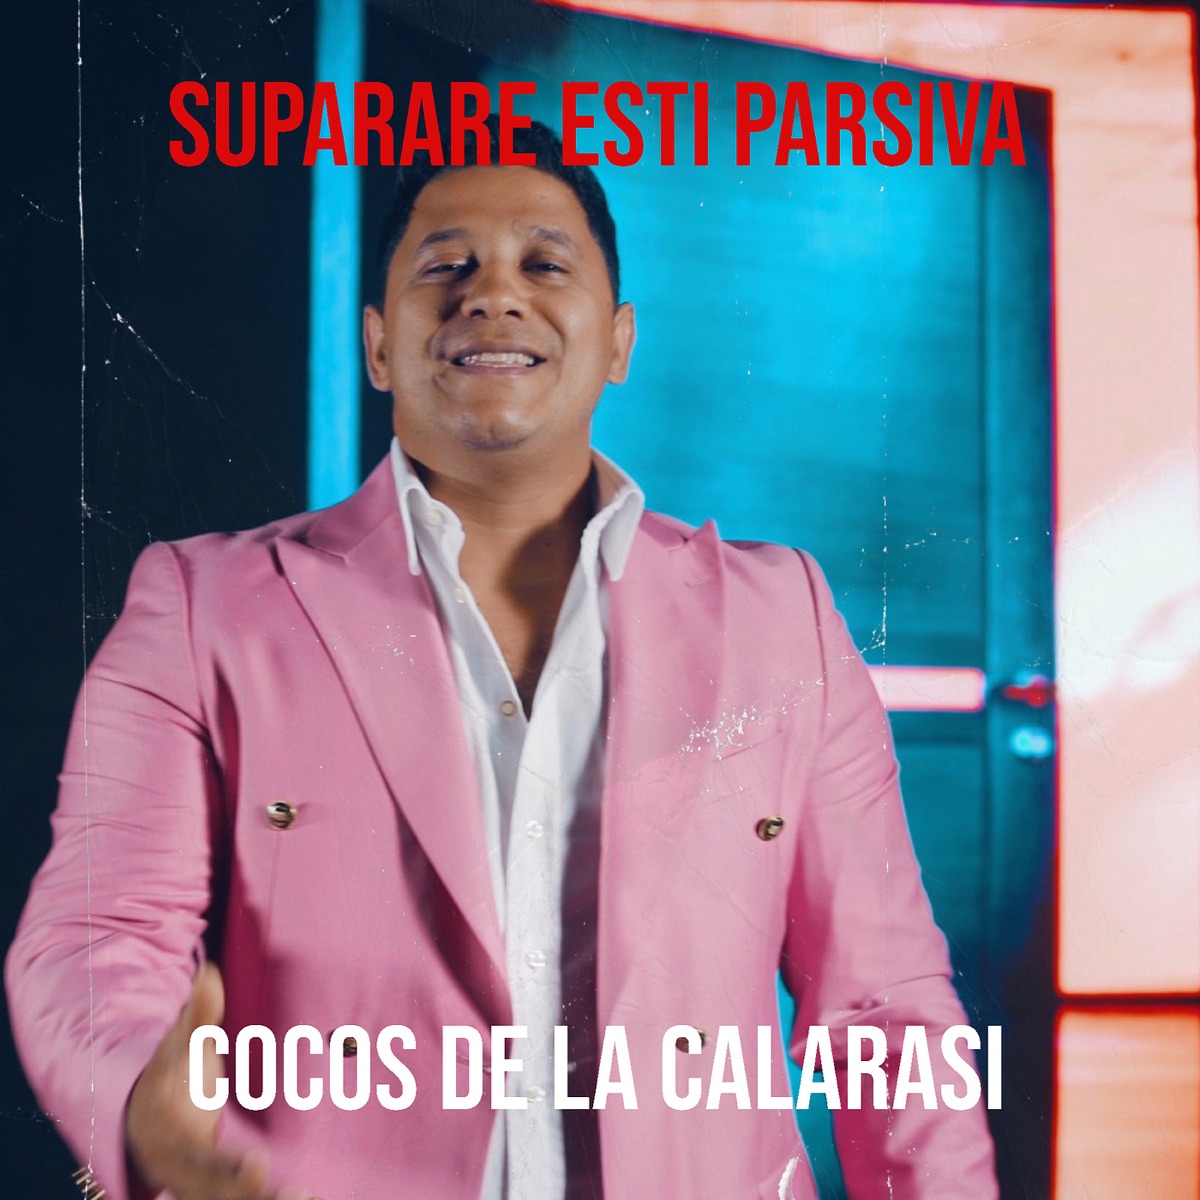 Suparare Esti Parsiva - Single - Album by Cocos de la Calarasi - Apple Music